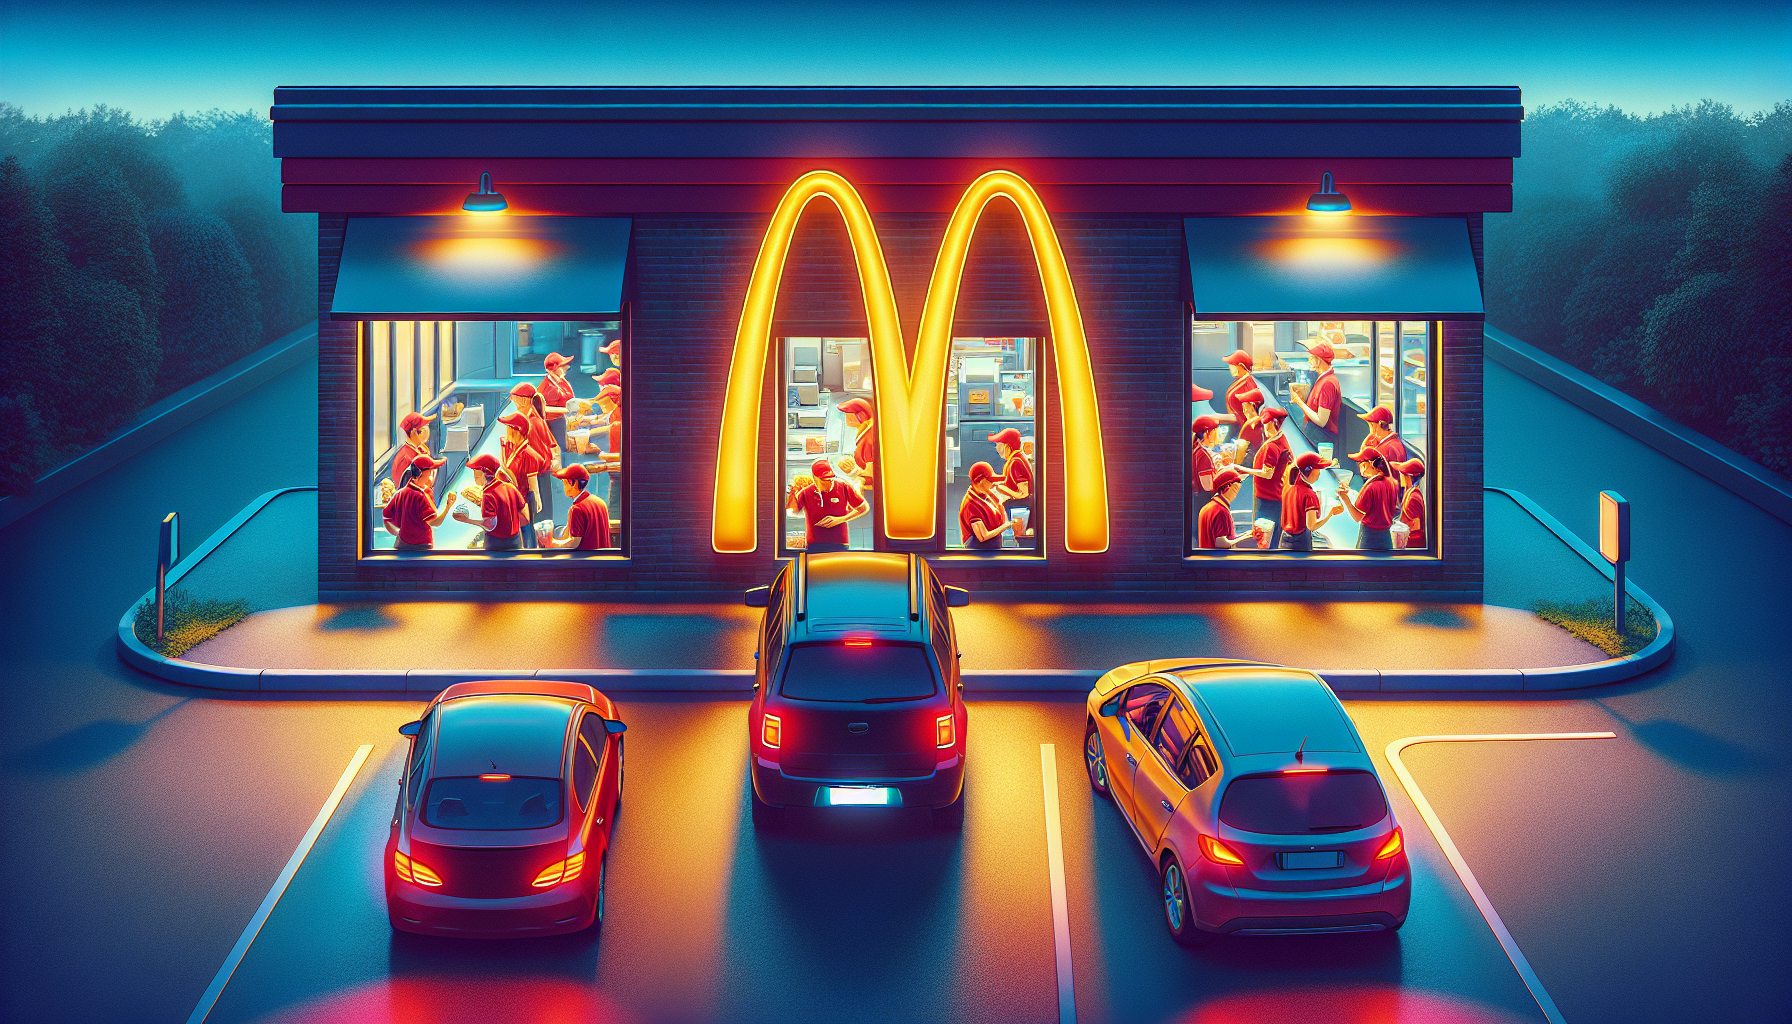 McDonald's drive-thru window